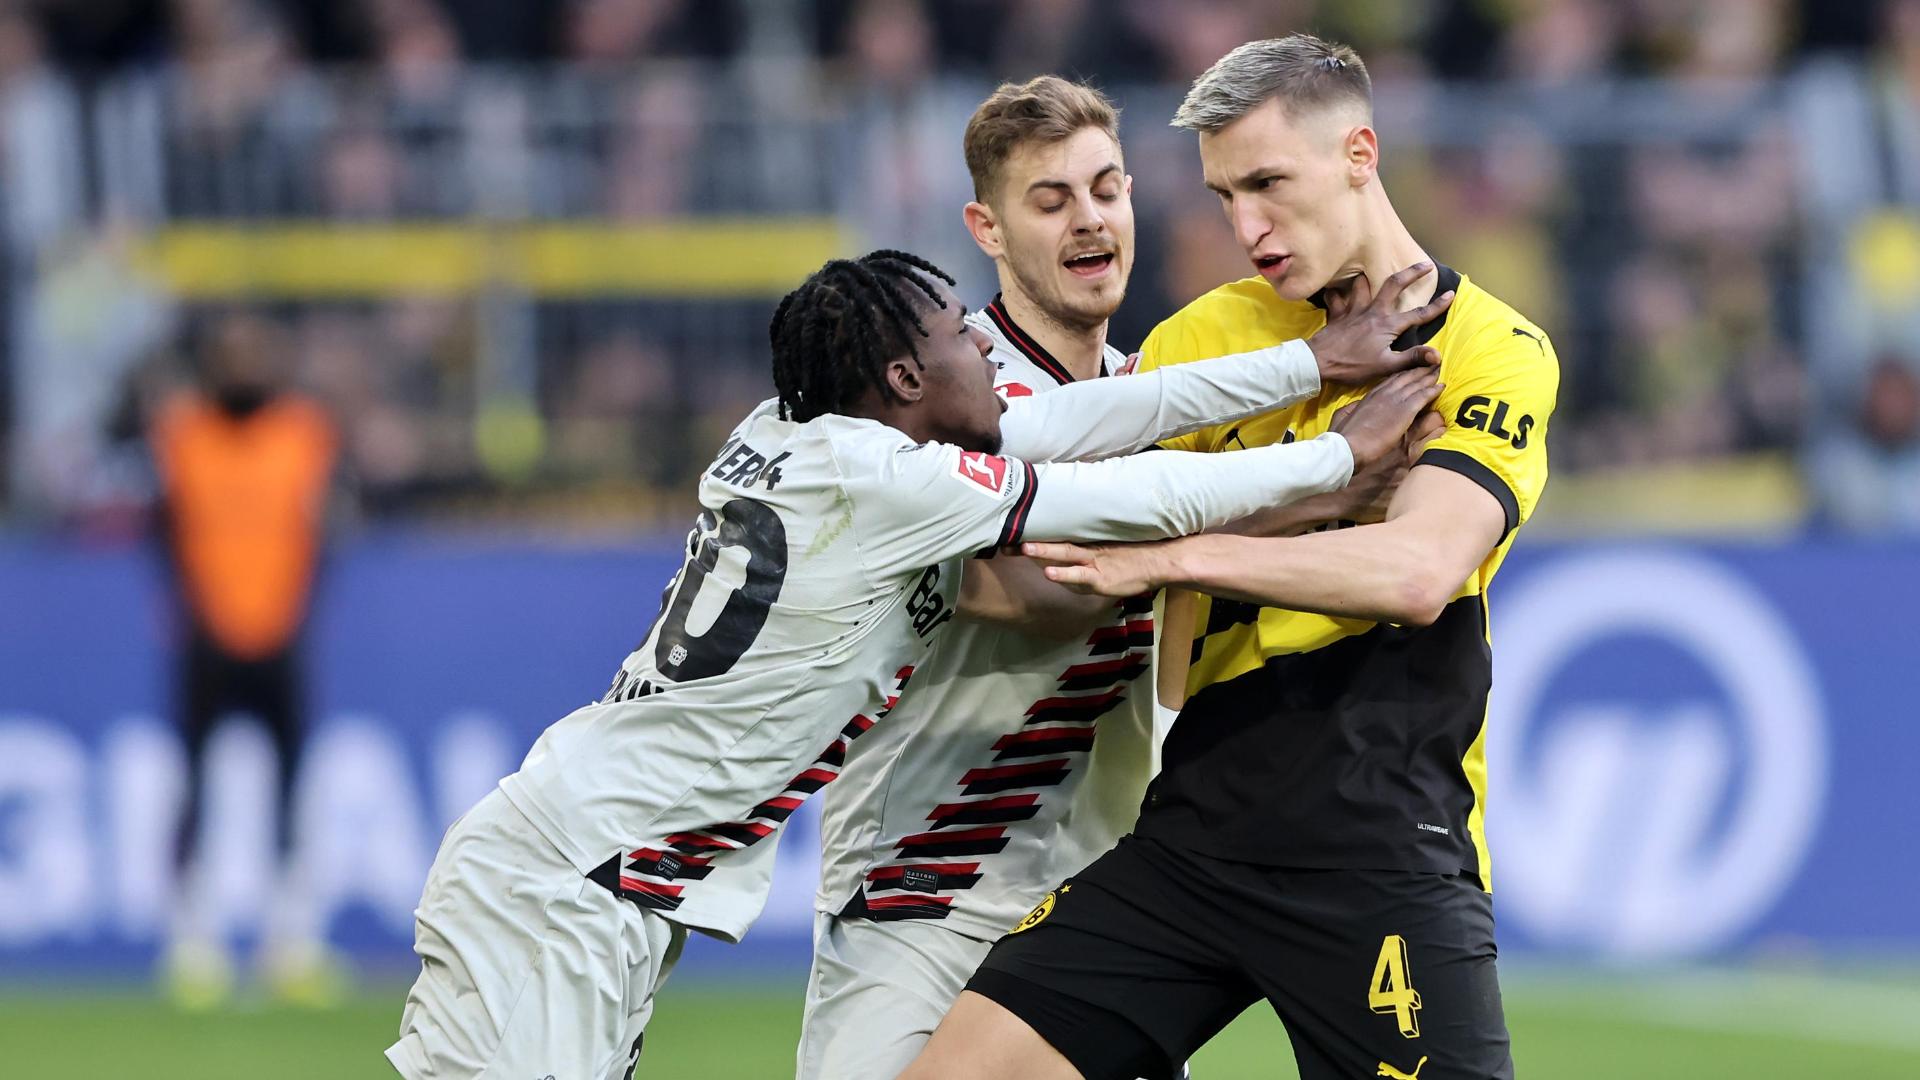 Scuffle ensues between Dortmund and Leverkusen after sliding challenge